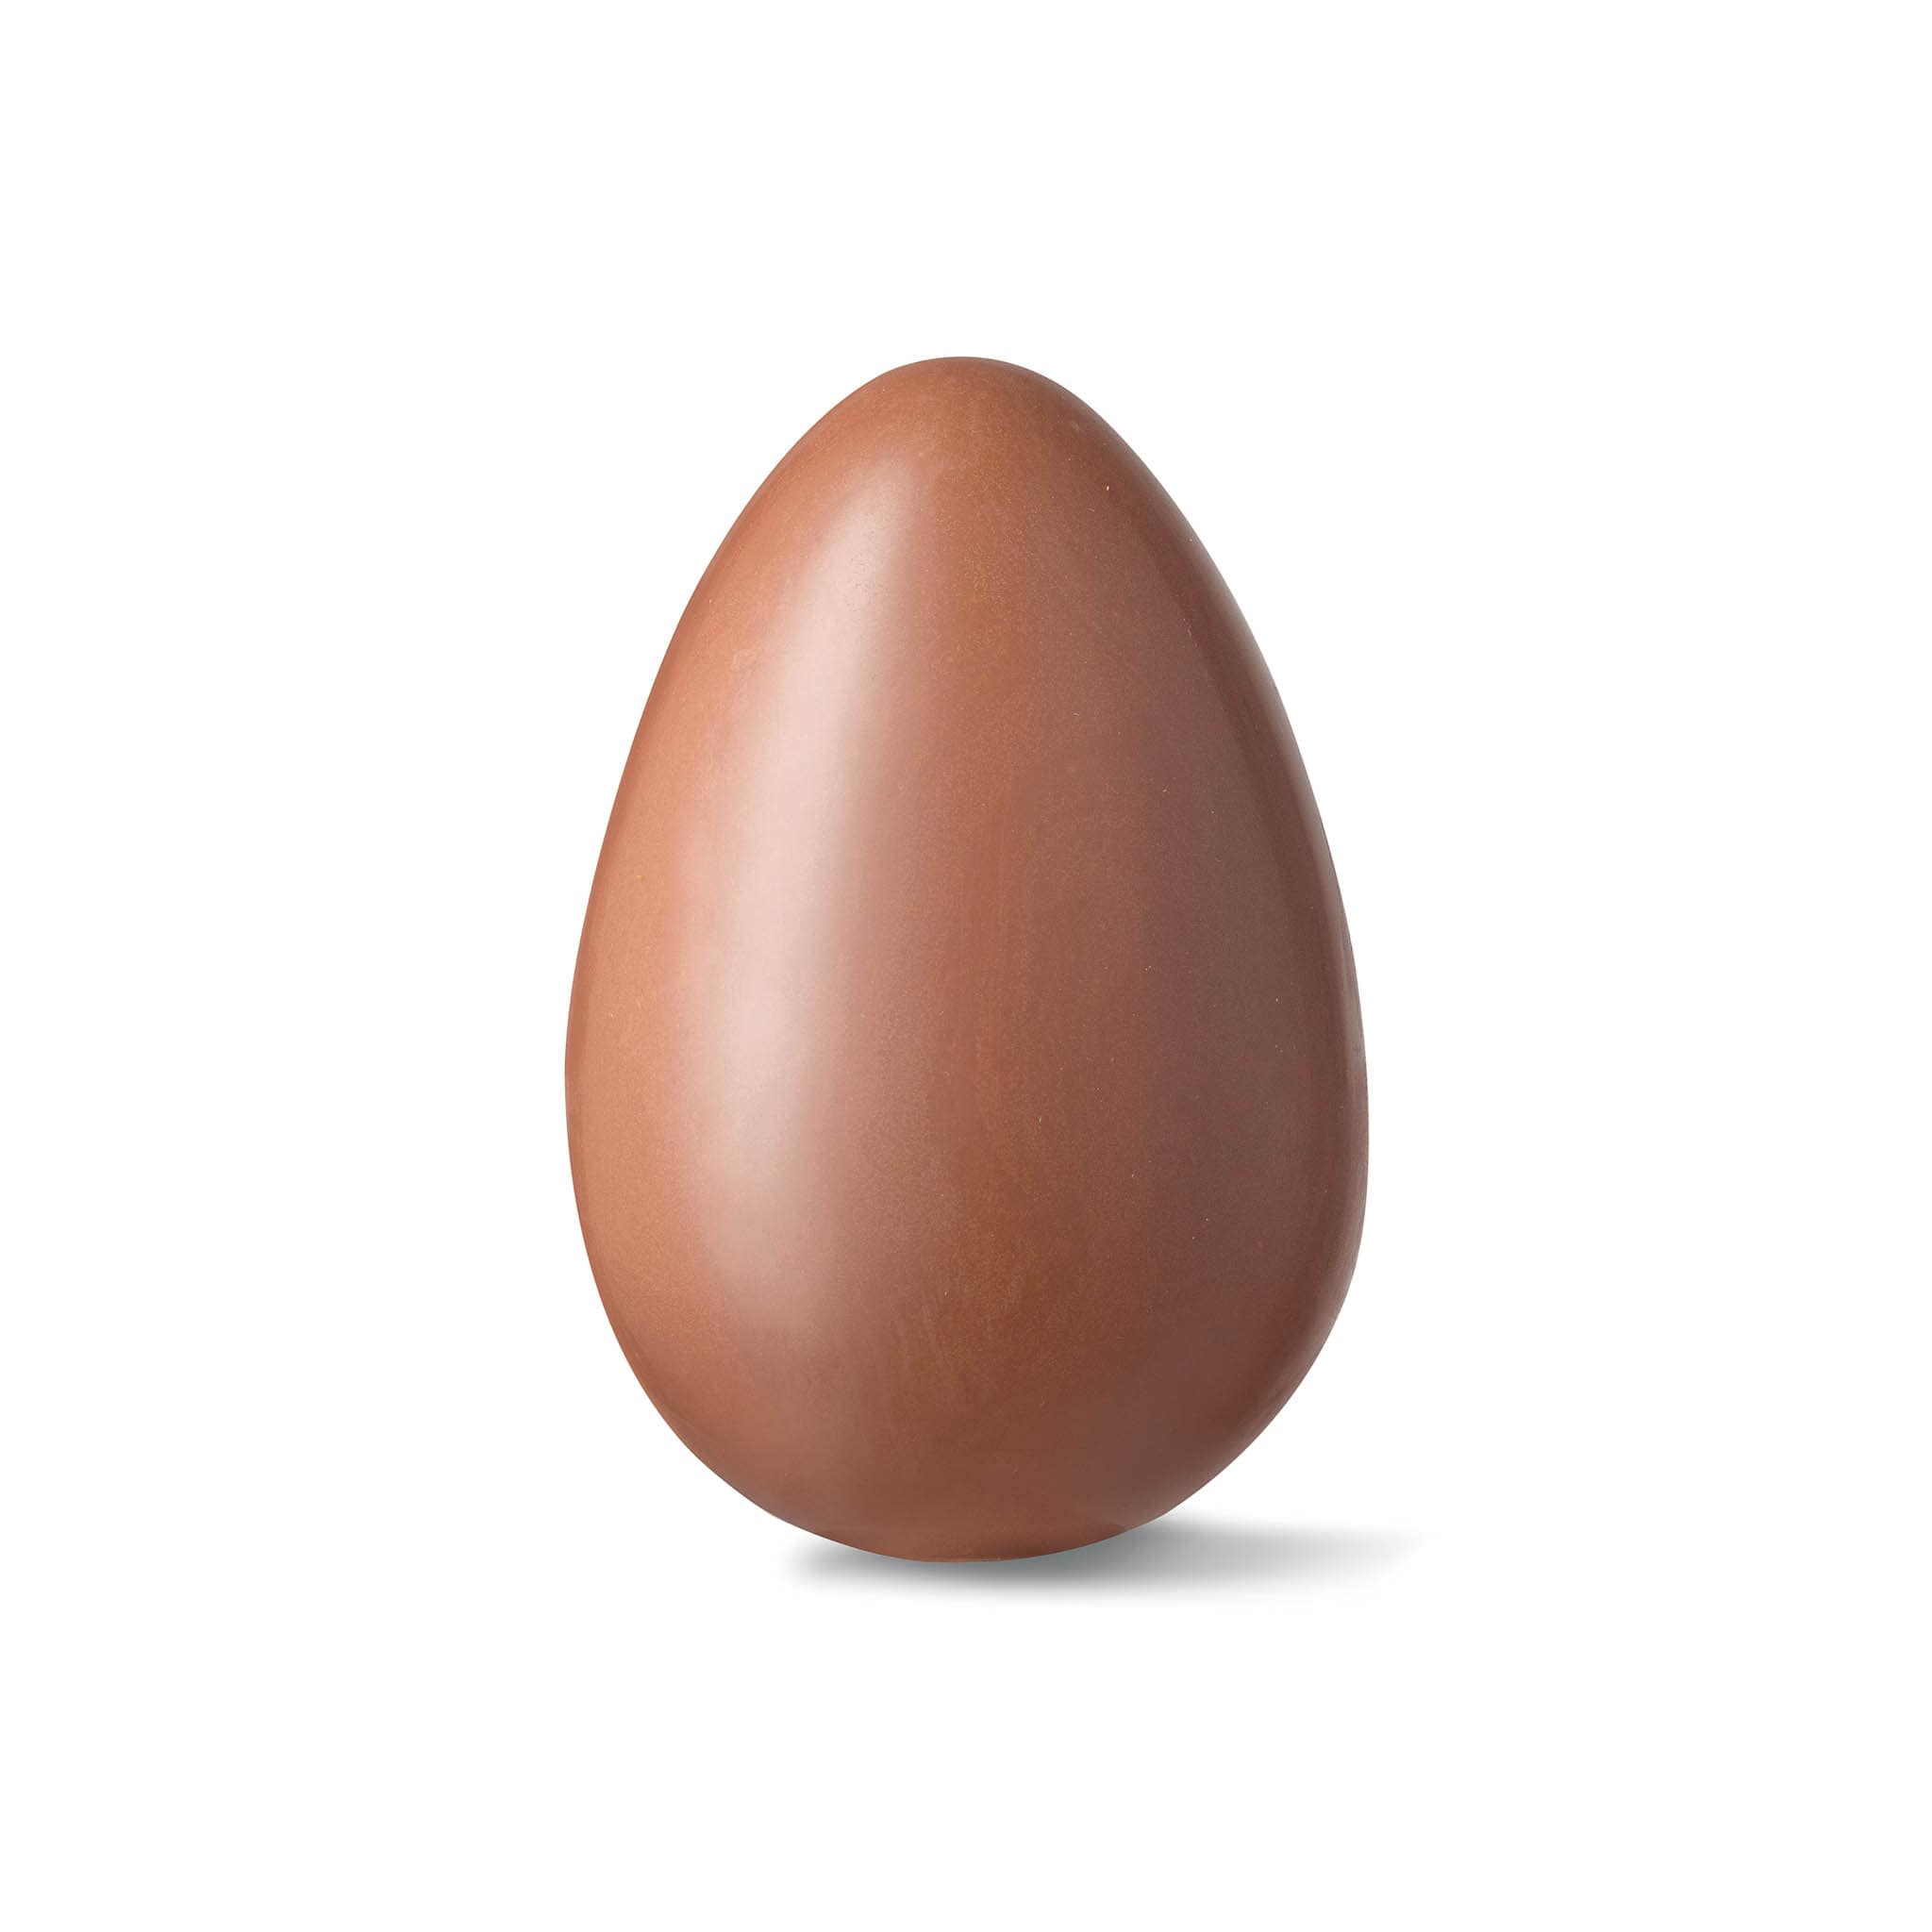 La Perla di Torino Vegan Coconut Milk Chocolate Truffle Filled Easter Egg, 100g